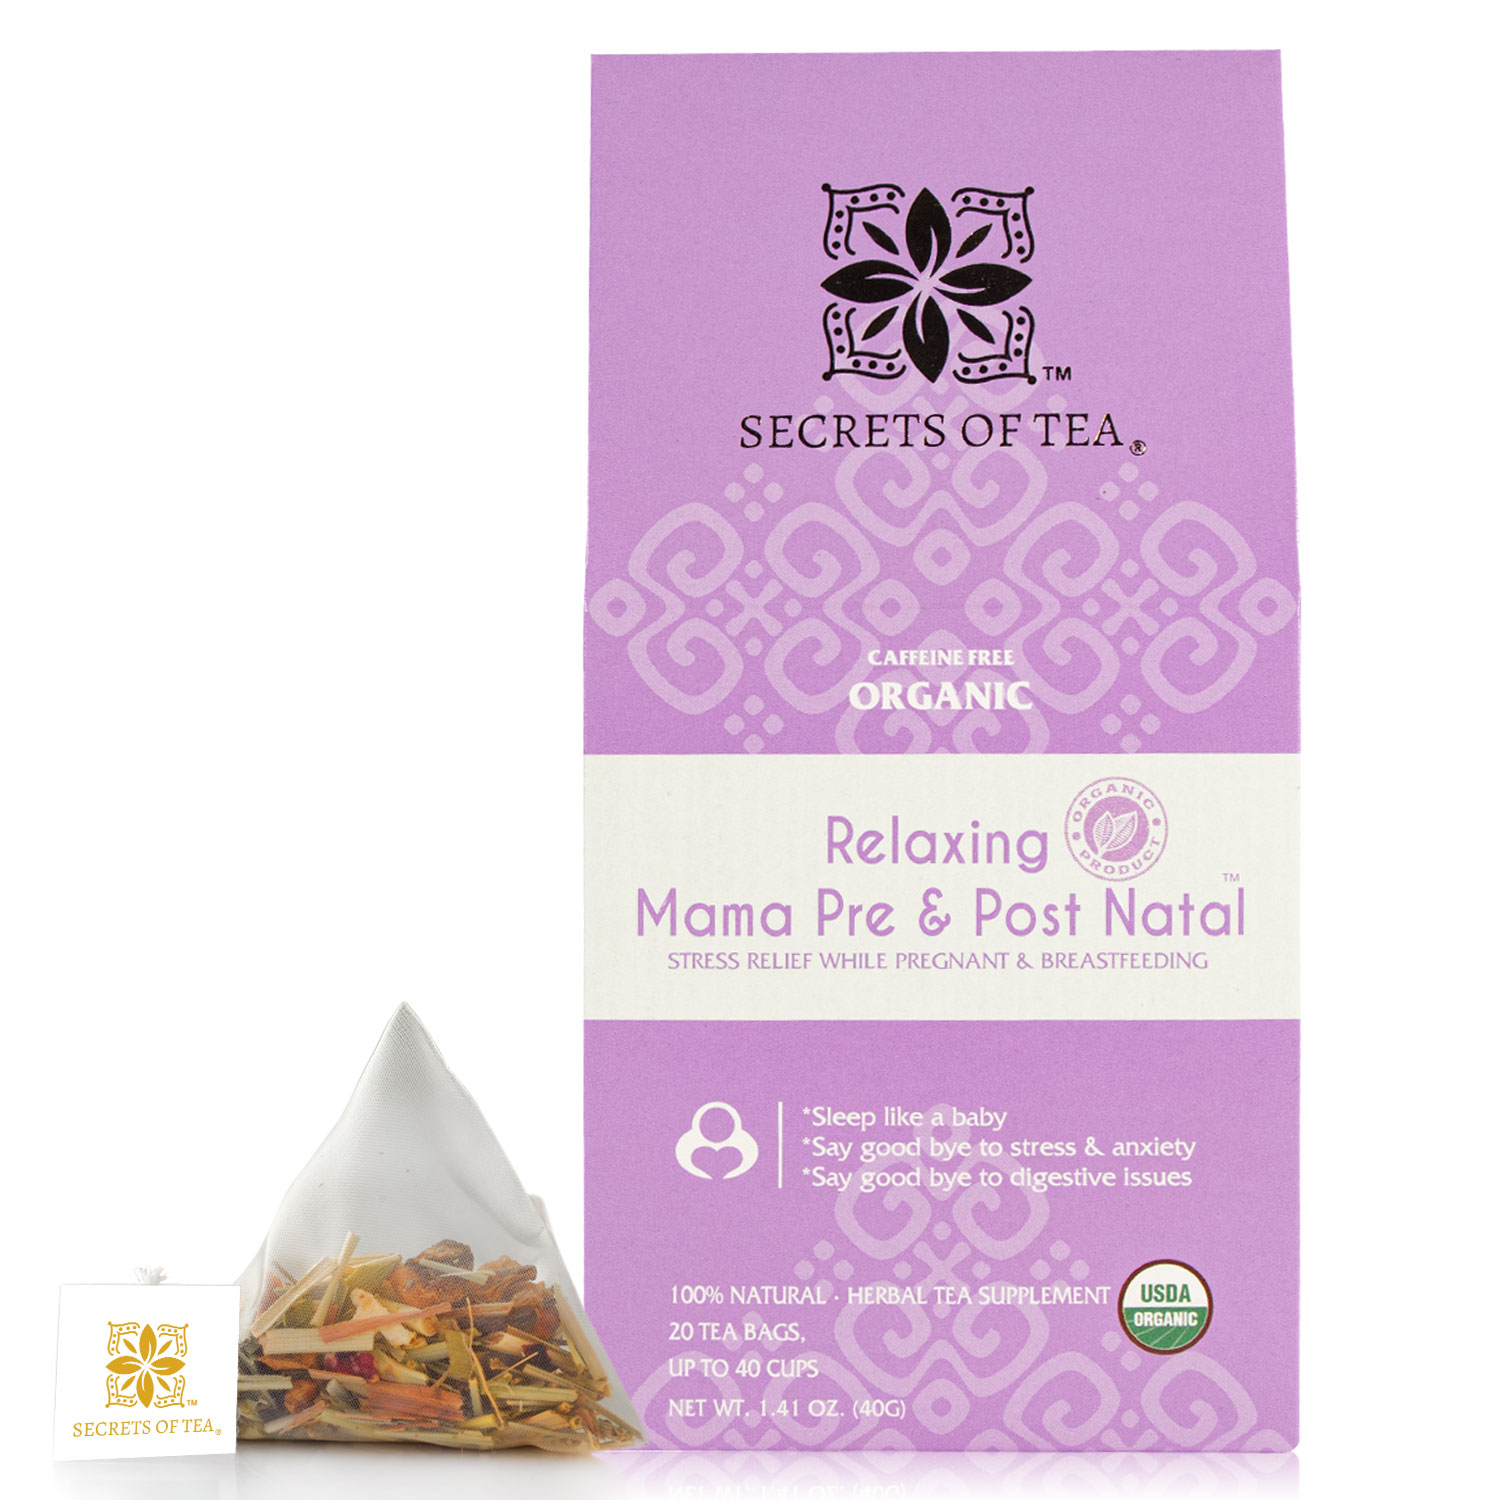 Secrets of Tea Relaxing Mama Pre & Post Natal Tea 2 innerpacks per case 2.0 oz